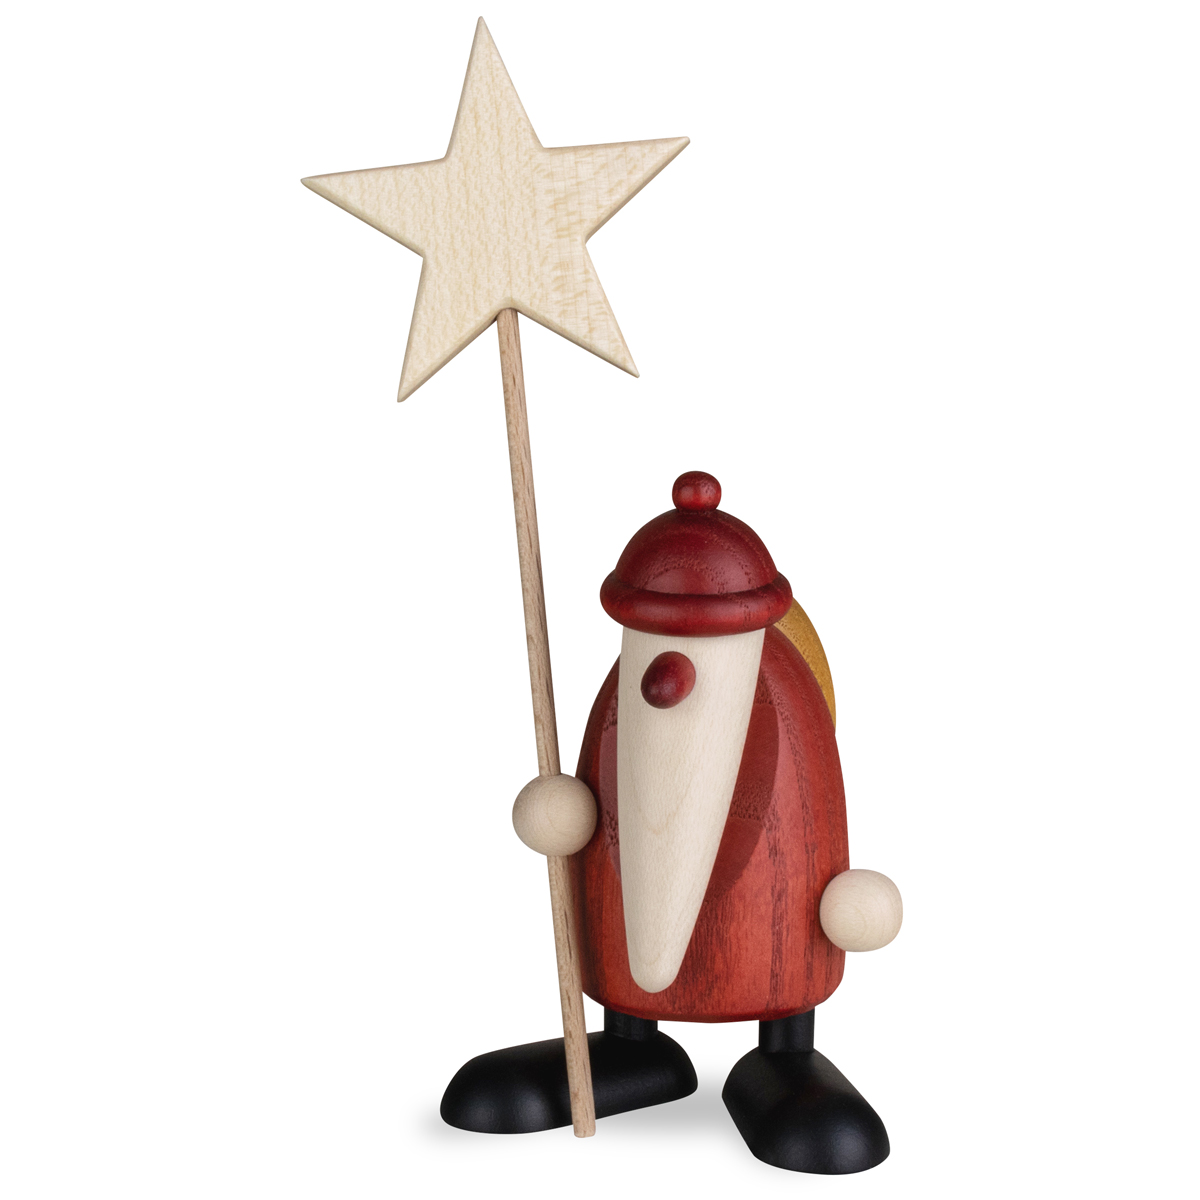 Santa Claus holding a star, small